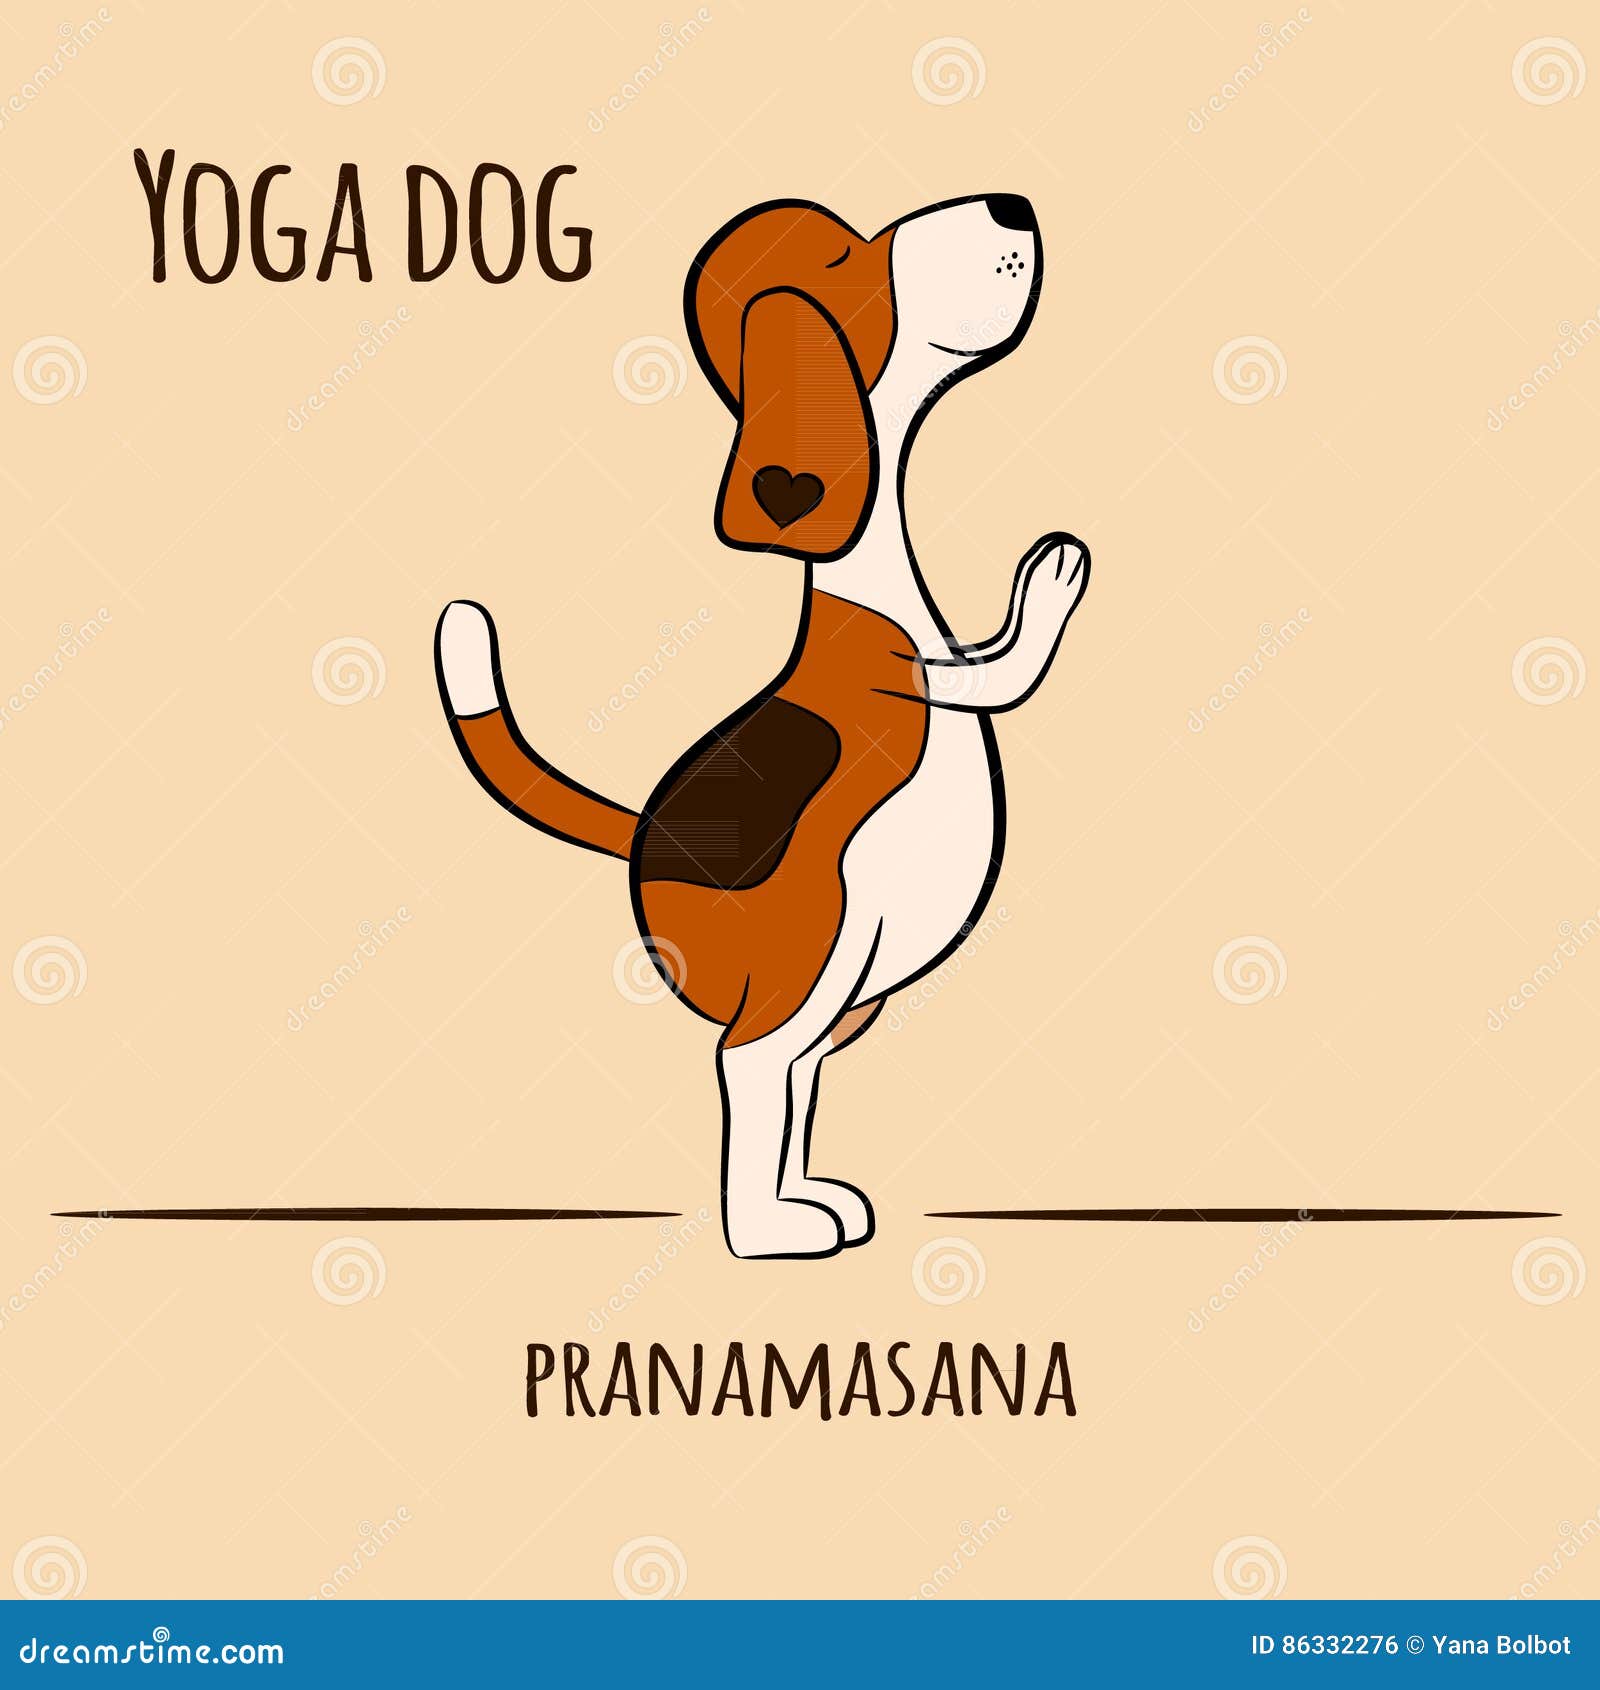 Cartoon Dog Shows Yoga Pose Pranamasana Stock Vector - Illustration of  animal, peaceful: 86332276